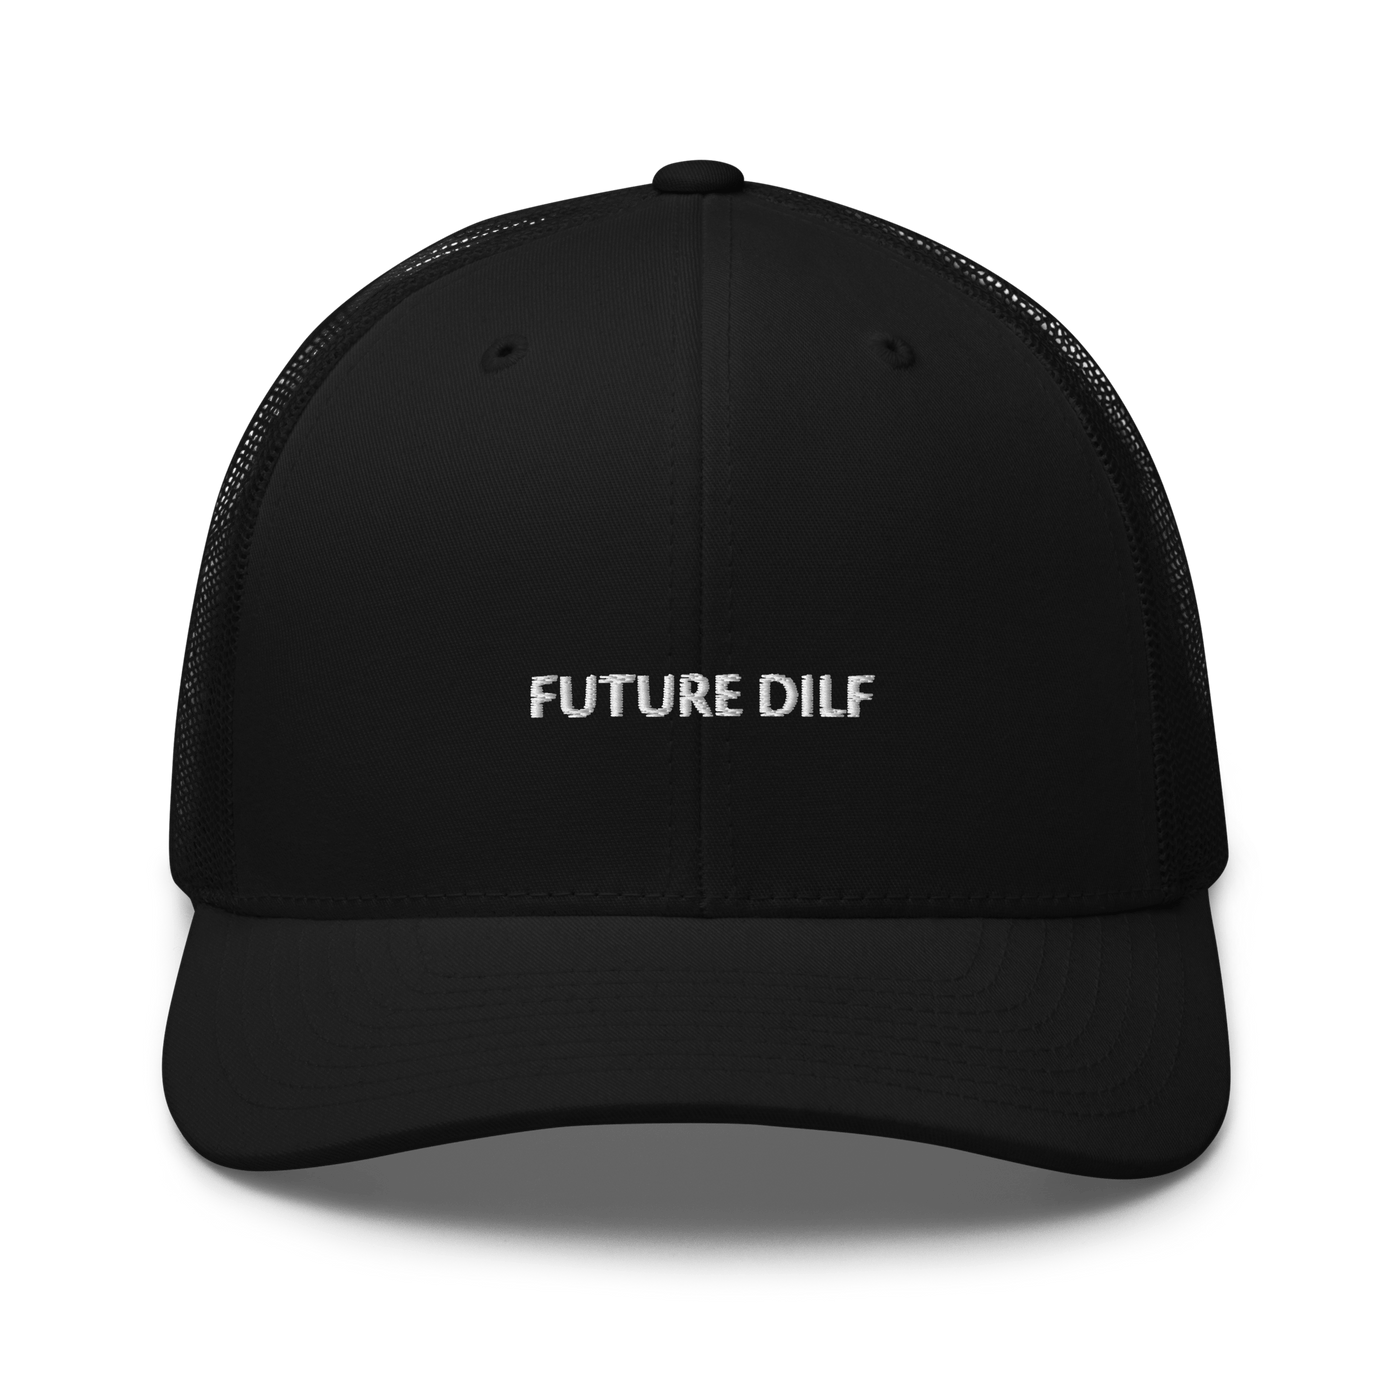 Future Dilf Trucker Cap - Black - - Just Another Cap Store